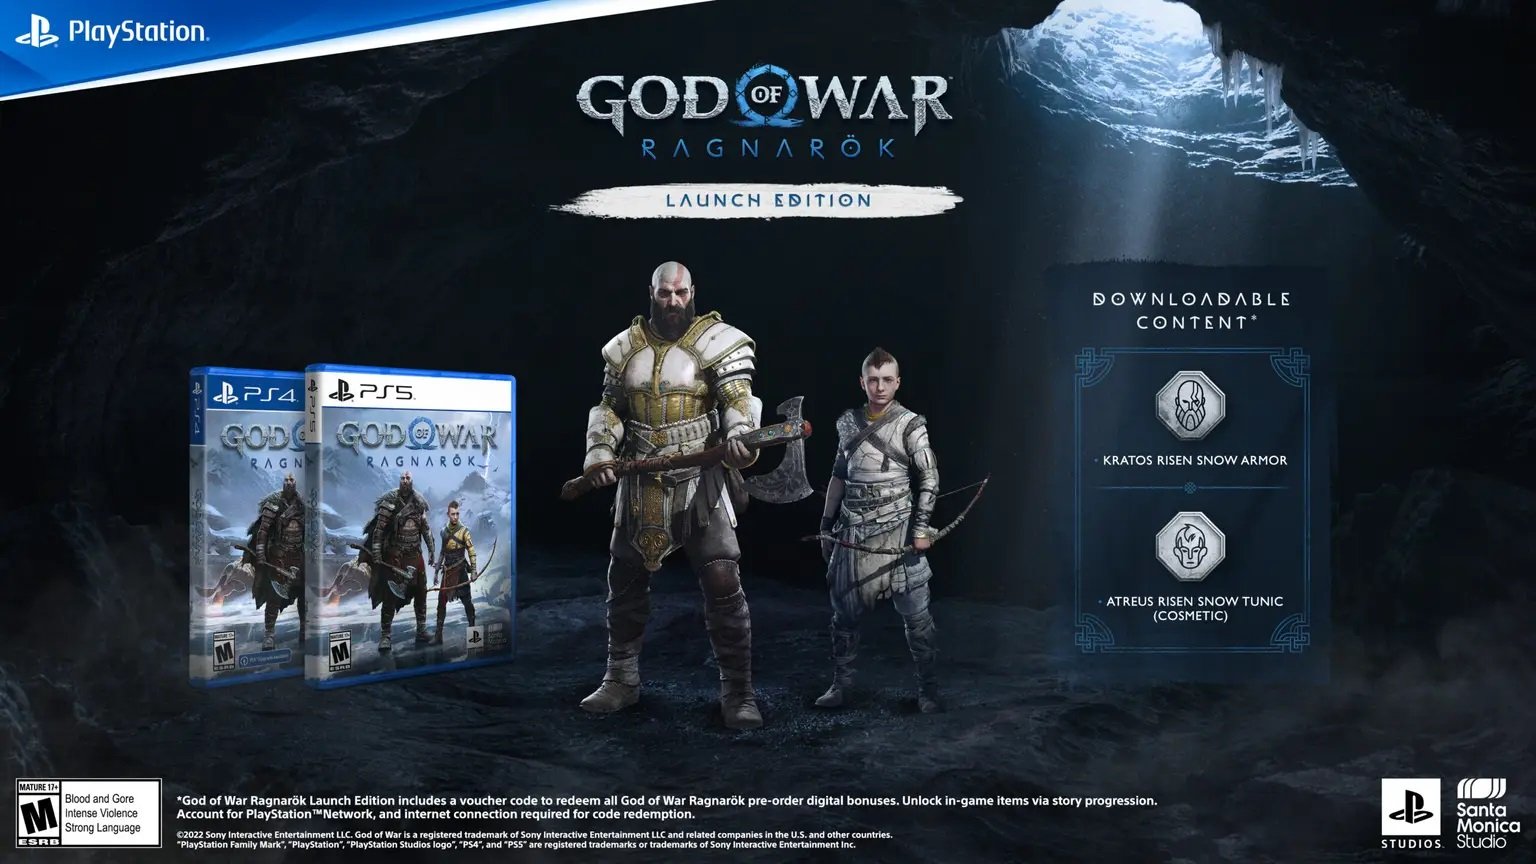 God of War Ragnarök pre-orders are open, revealing PS5 graphics